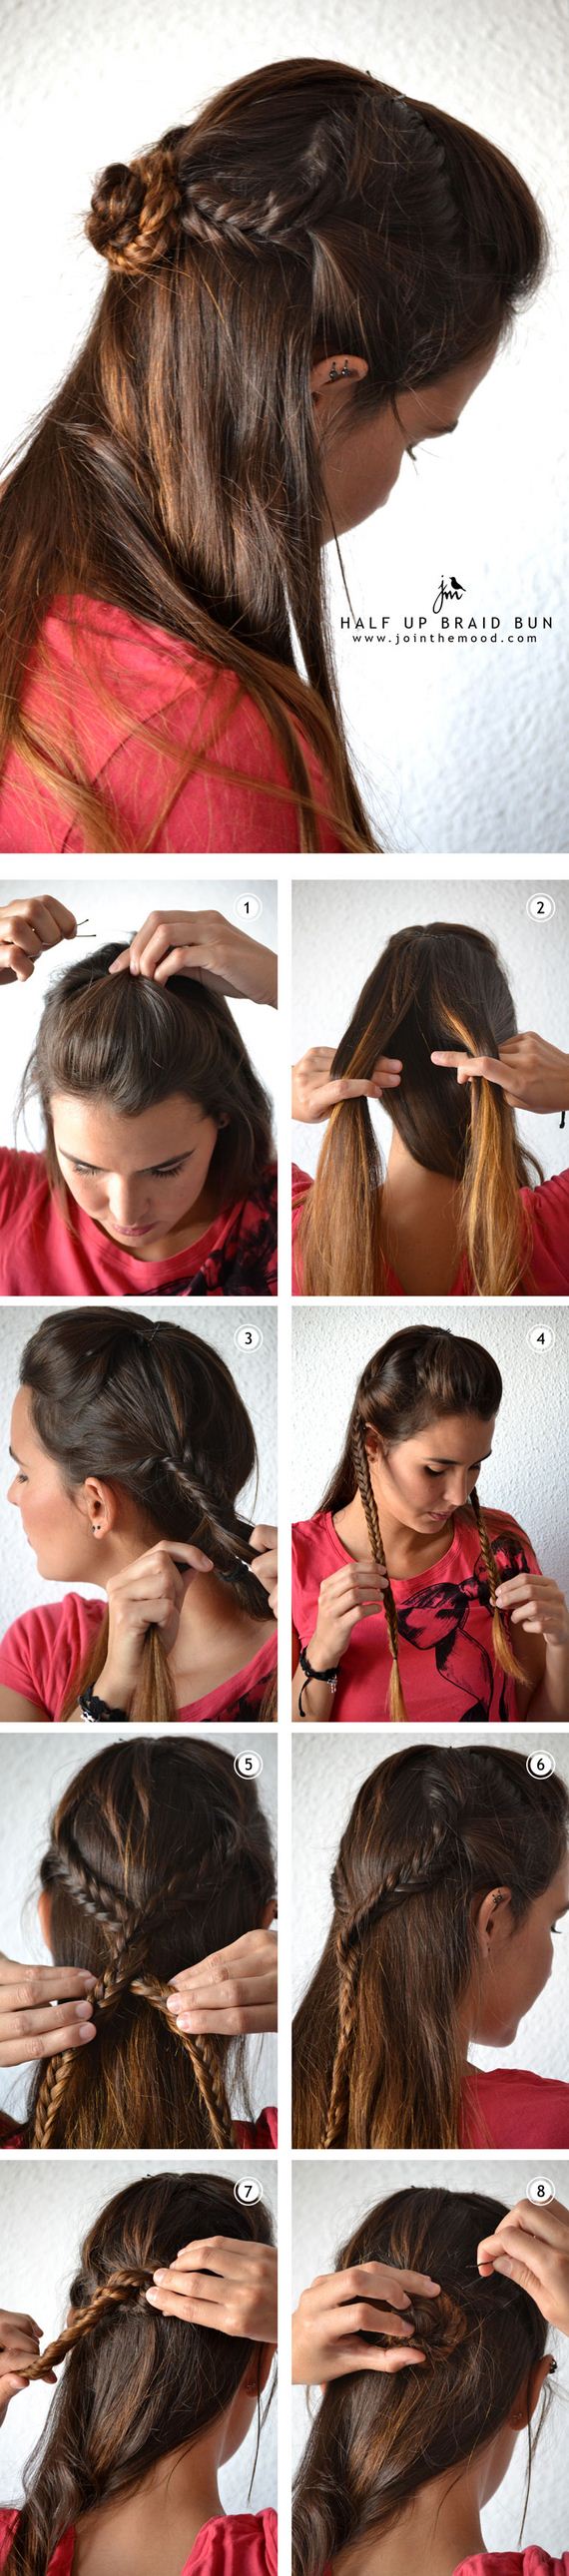 09-short-hair-braided-tutorial